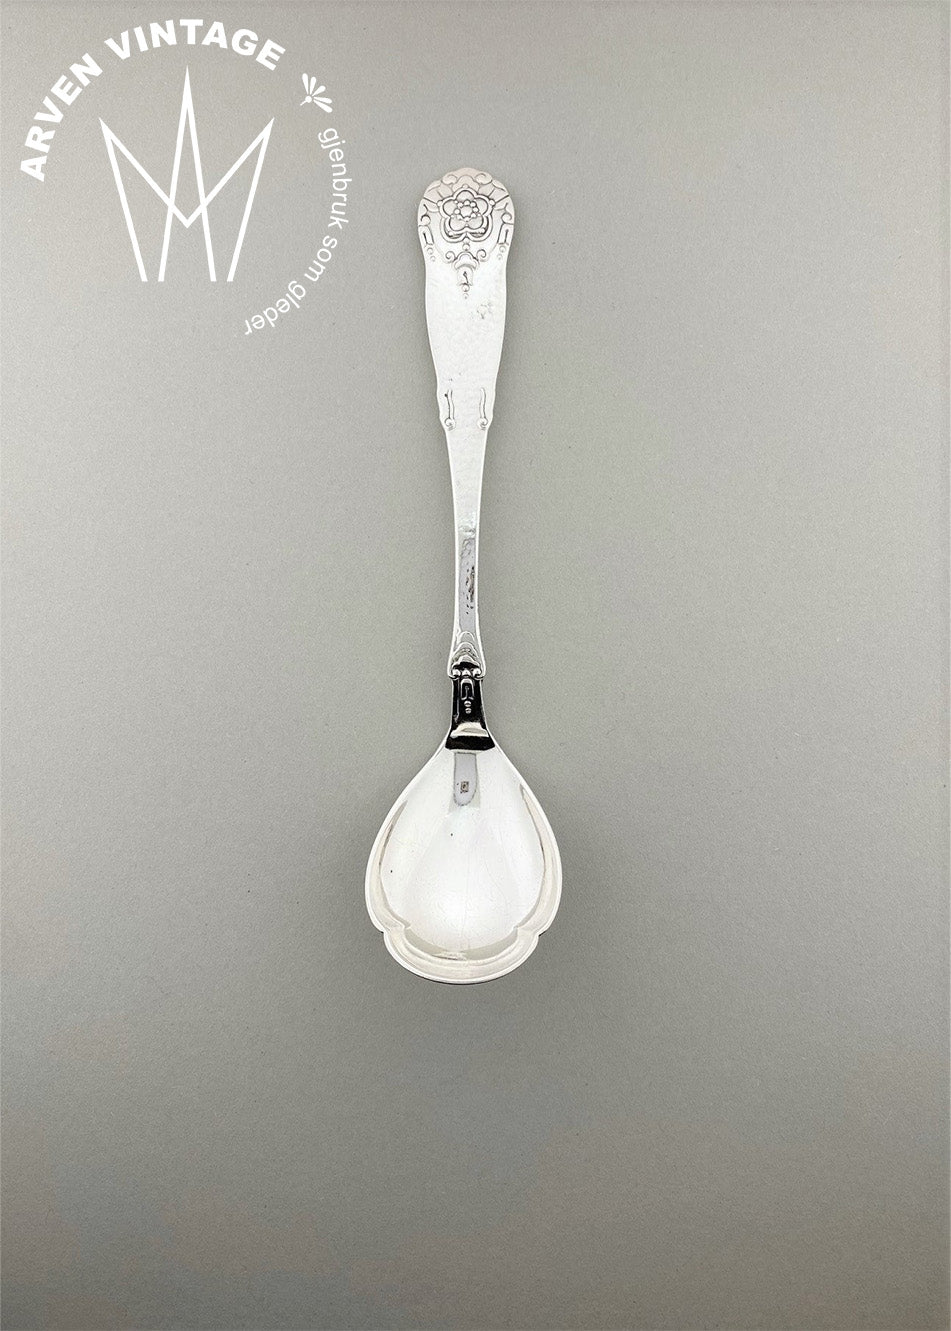 Vintage Hardanger jam spoon